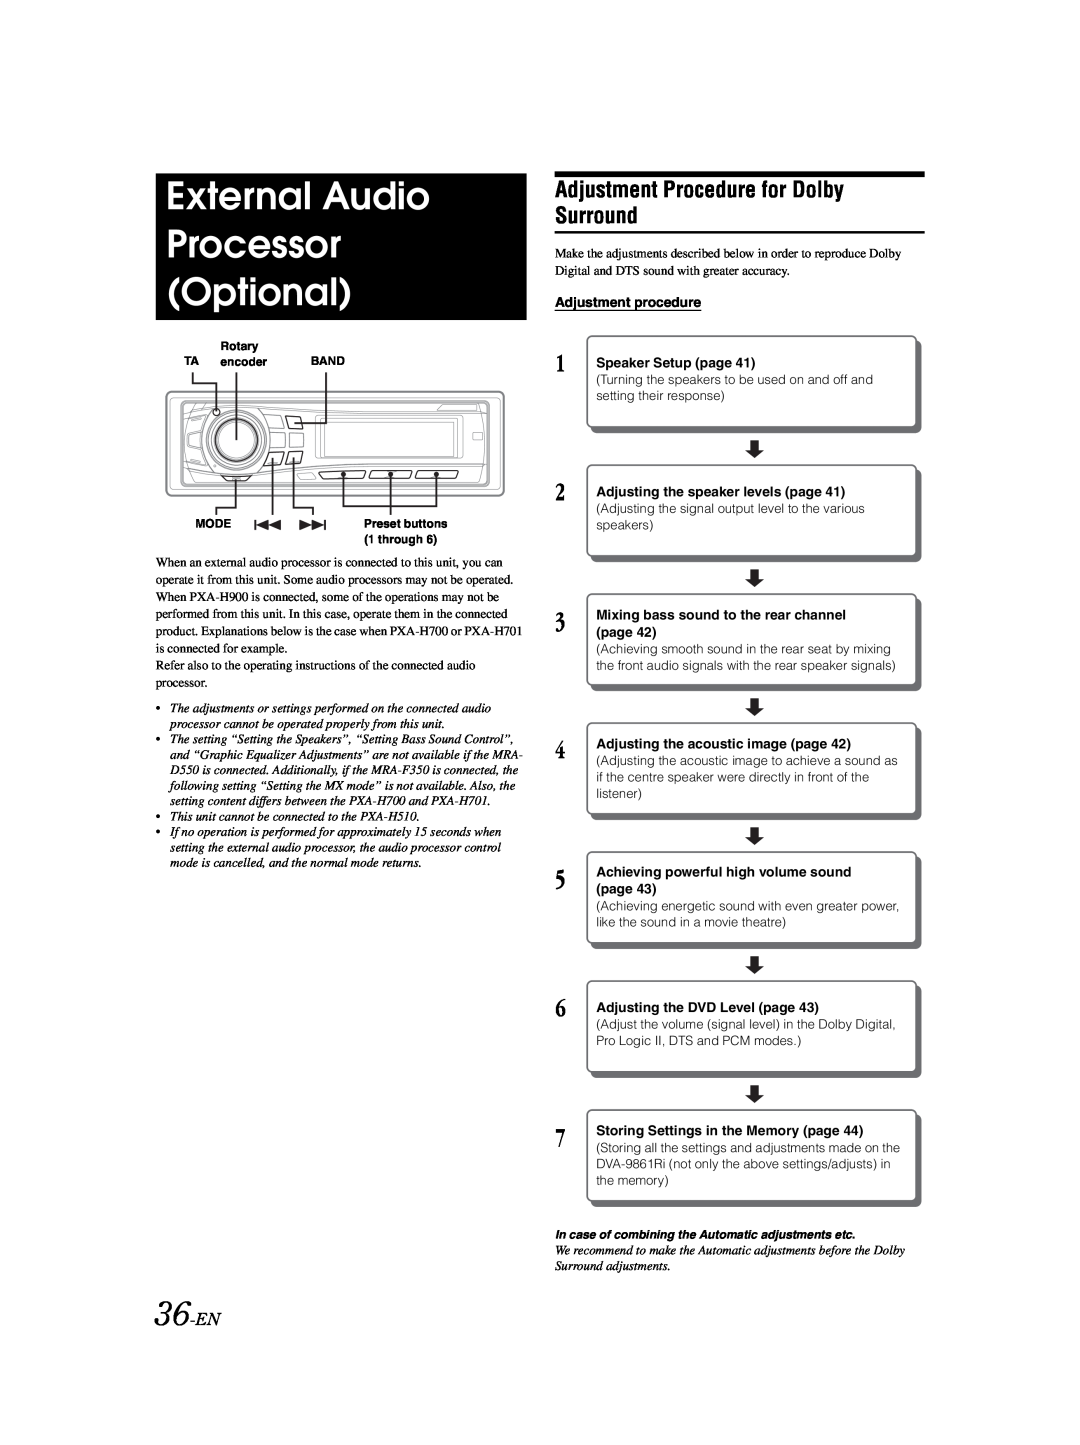 Alpine DVA-9861Ri owner manual External Audio Processor Optional, Adjustment Procedure for Dolby Surround, 36-EN 